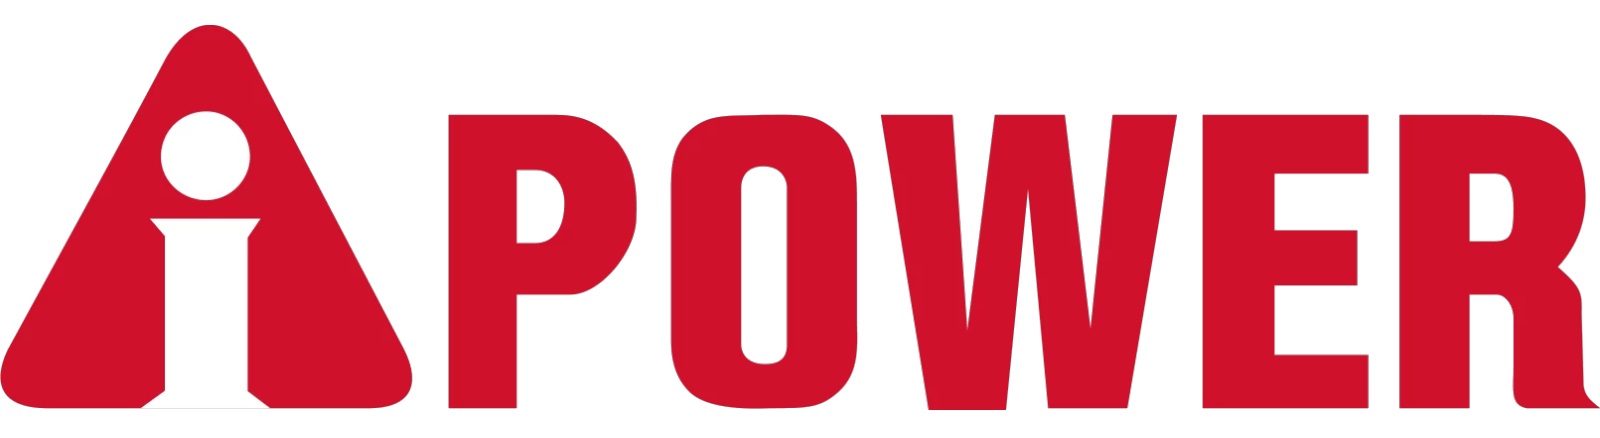 Логотип бренда A-iPower